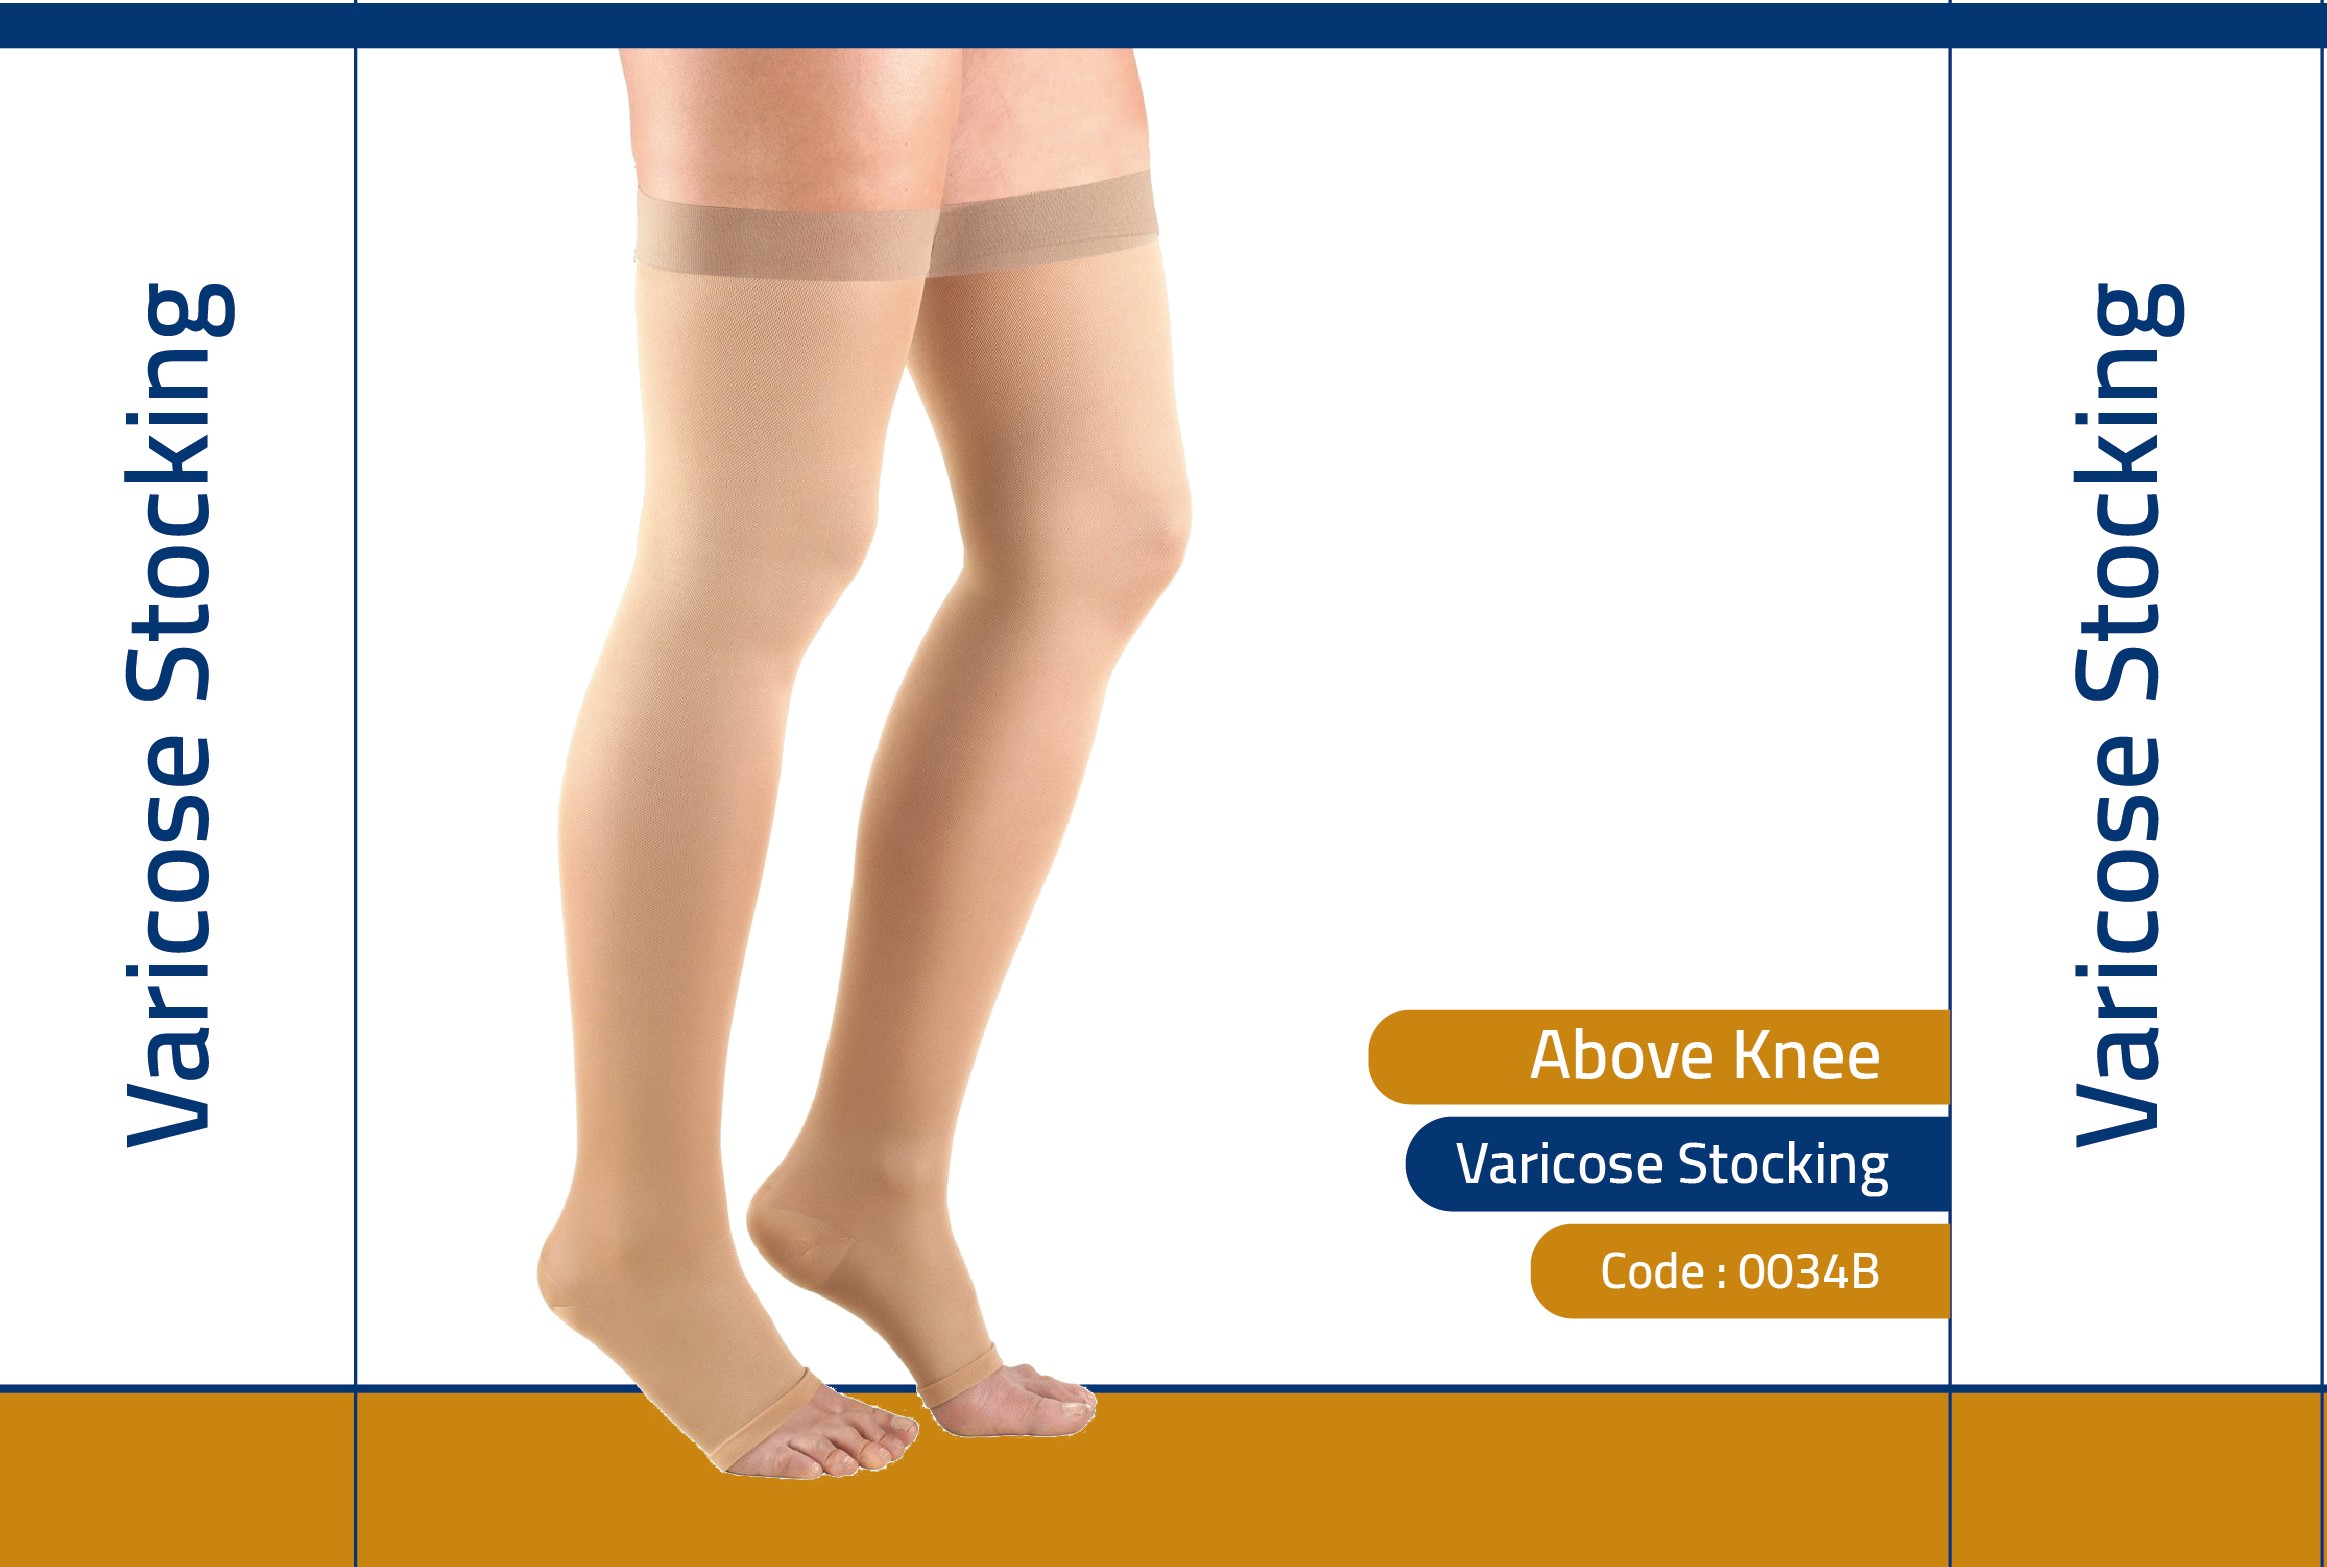 Varicose Stocking - Above Knee